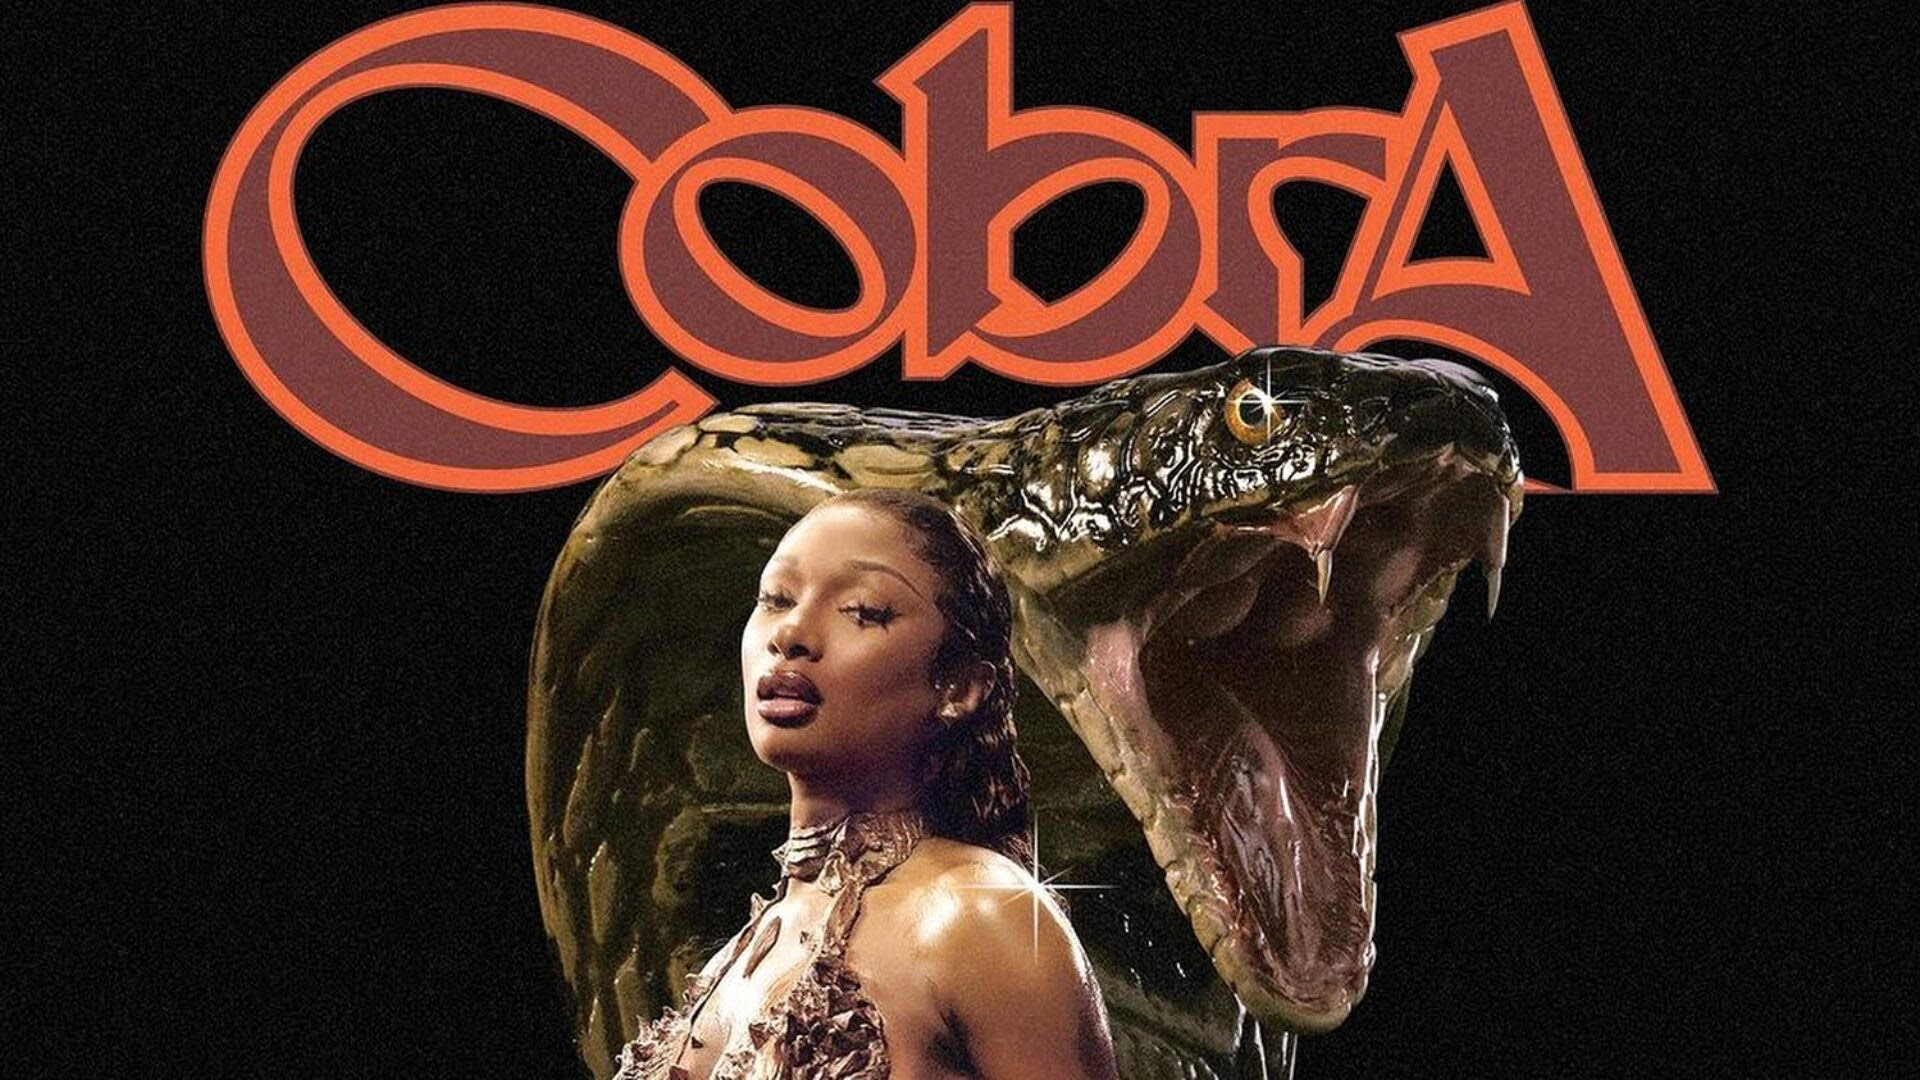 Cobra - Megan Thee Stallion